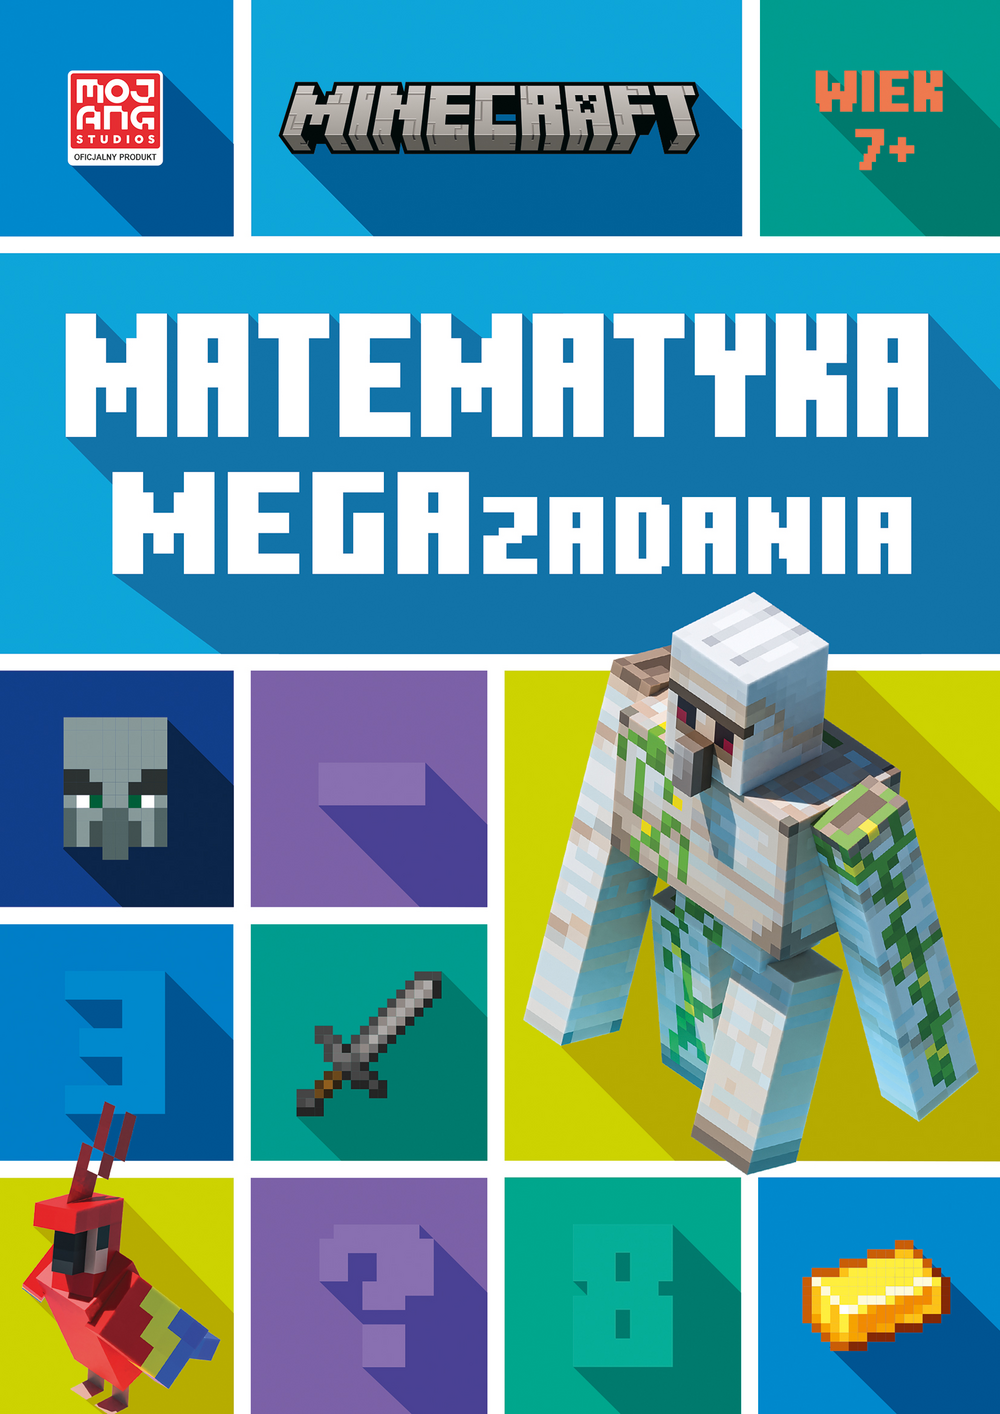 Wydawnictwo Harperkids Minecraft Matematyka Megazadania 7+